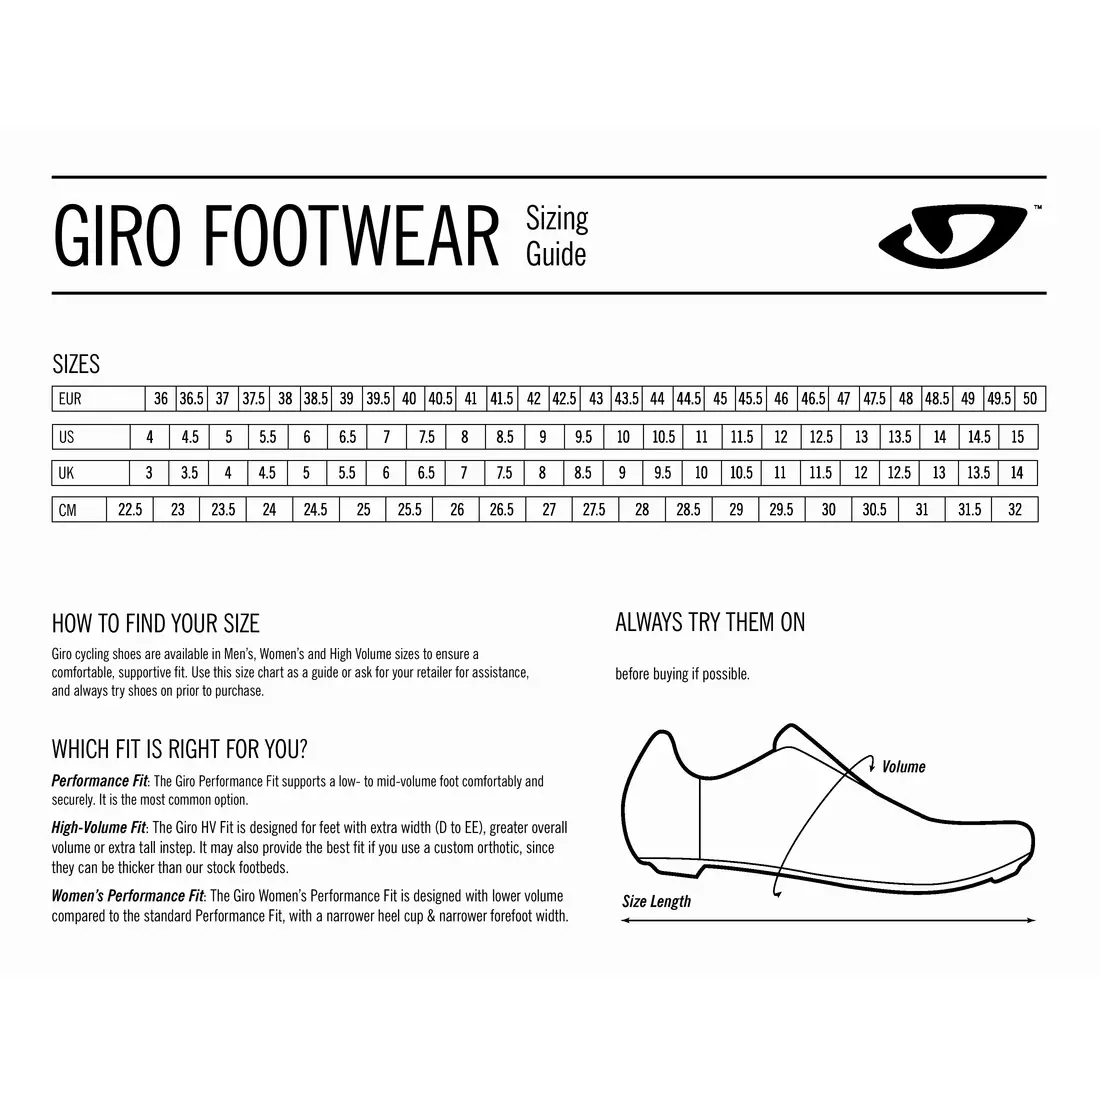 GIRO TECHNE - férfi fluoro kerékpáros cipő